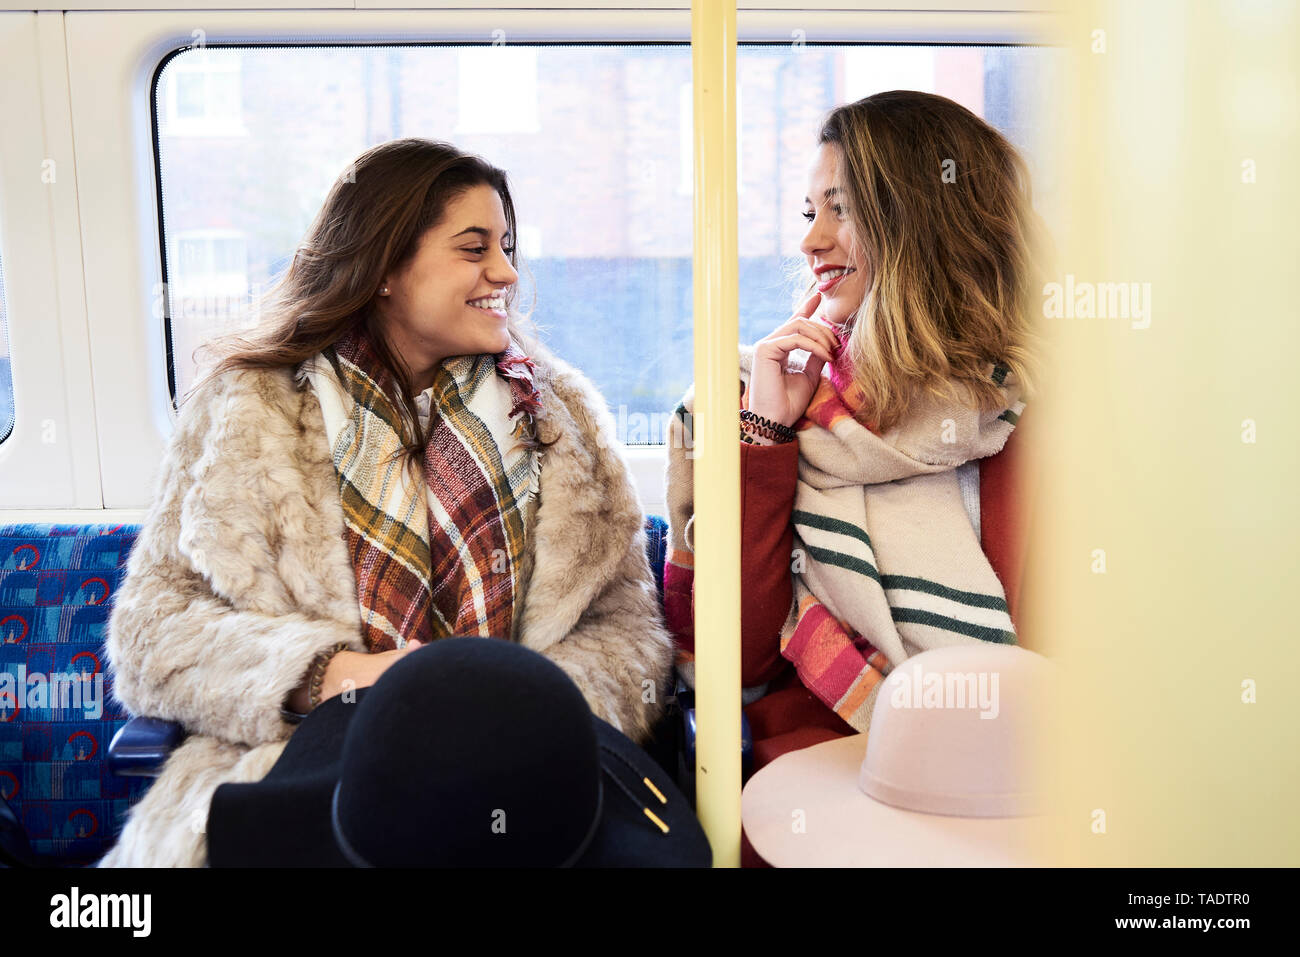 UK, London, two happy women in underground train Stock Photo